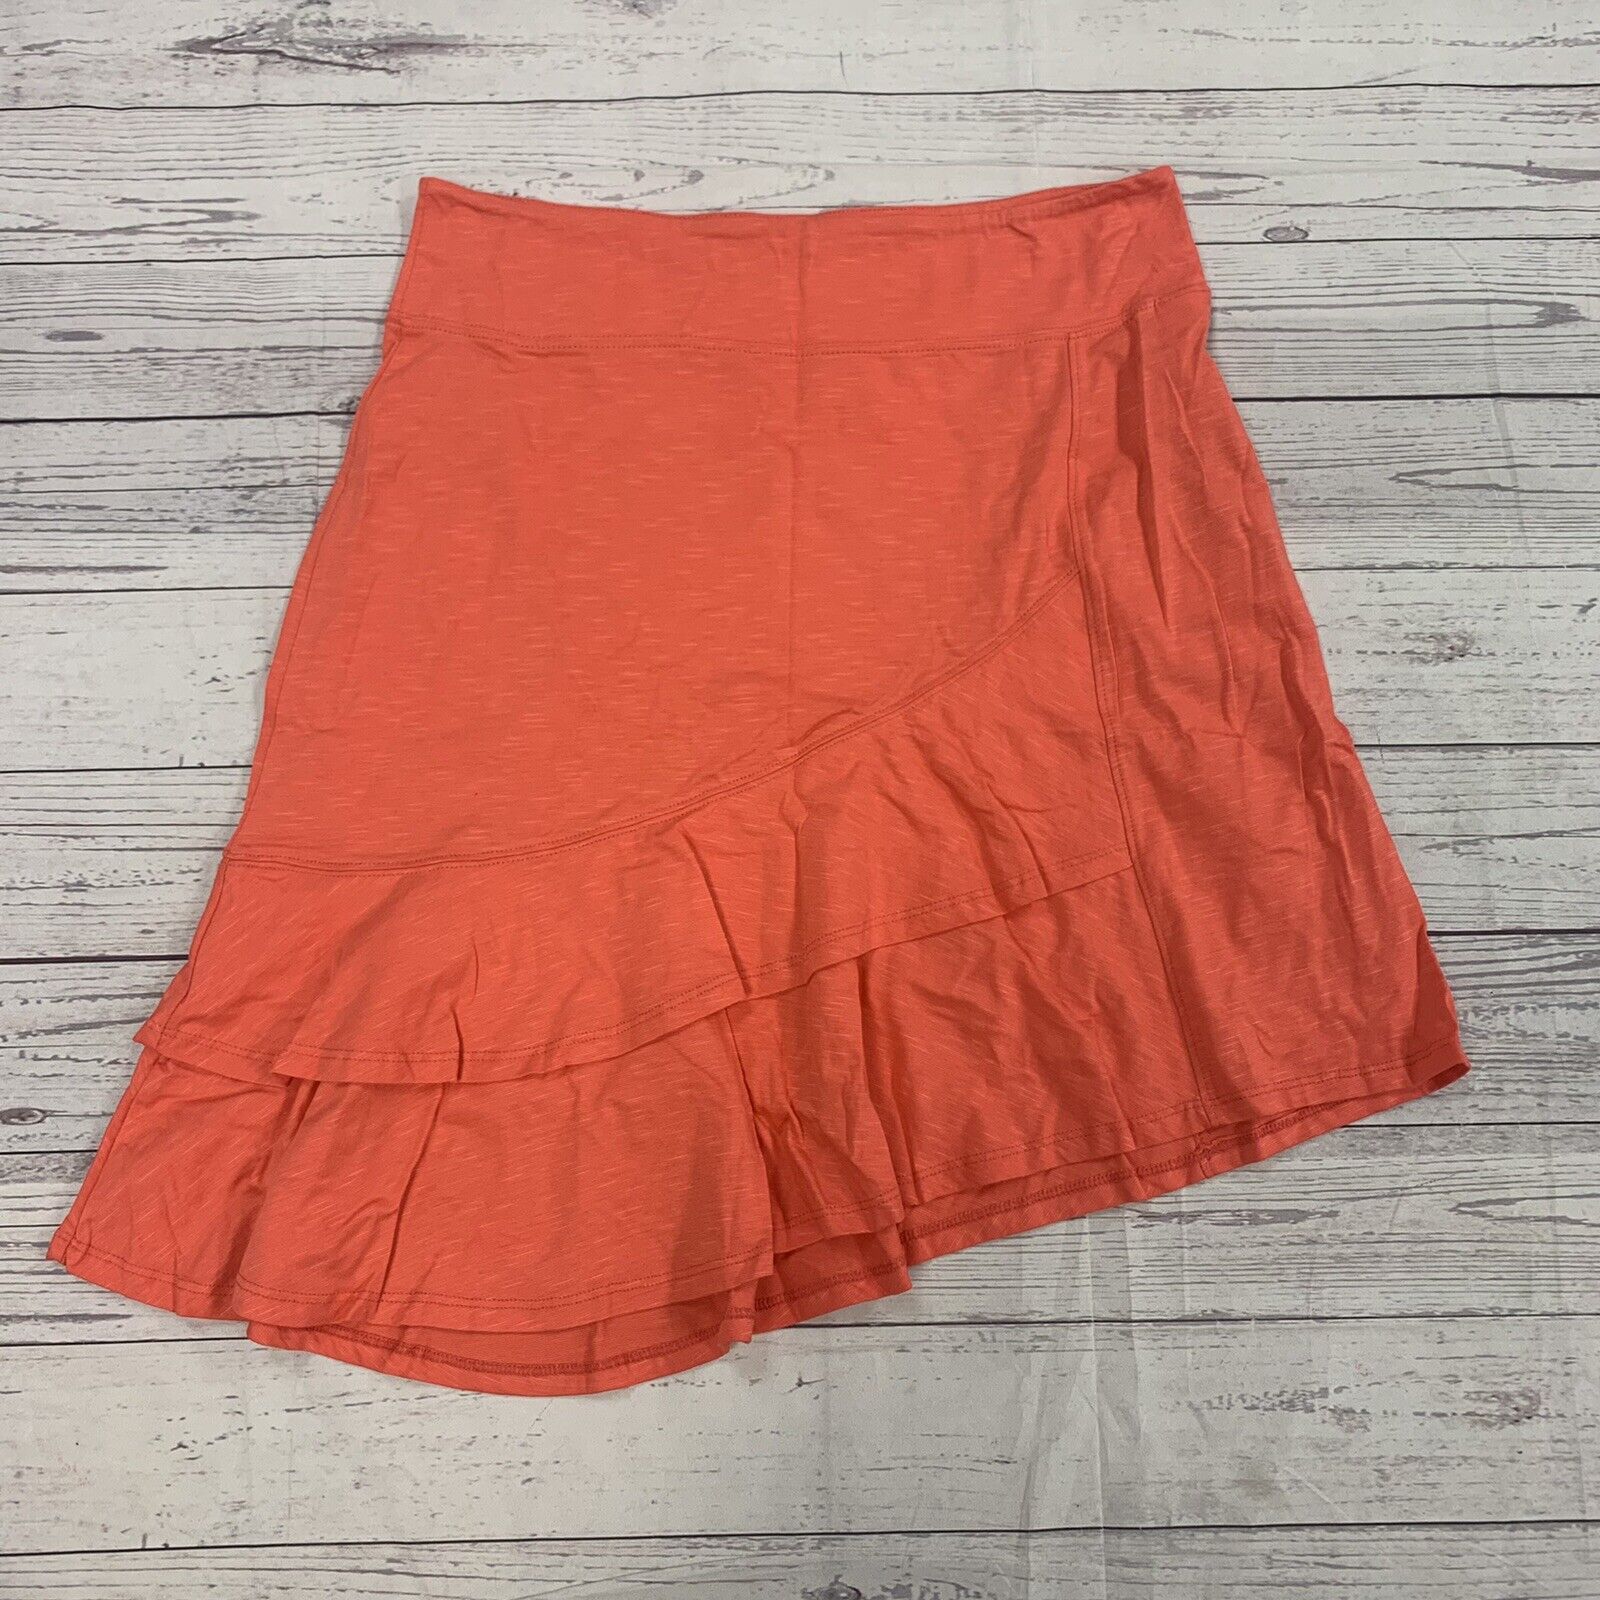 Horny Toad Womens Orange Turkish Skirt size Medium